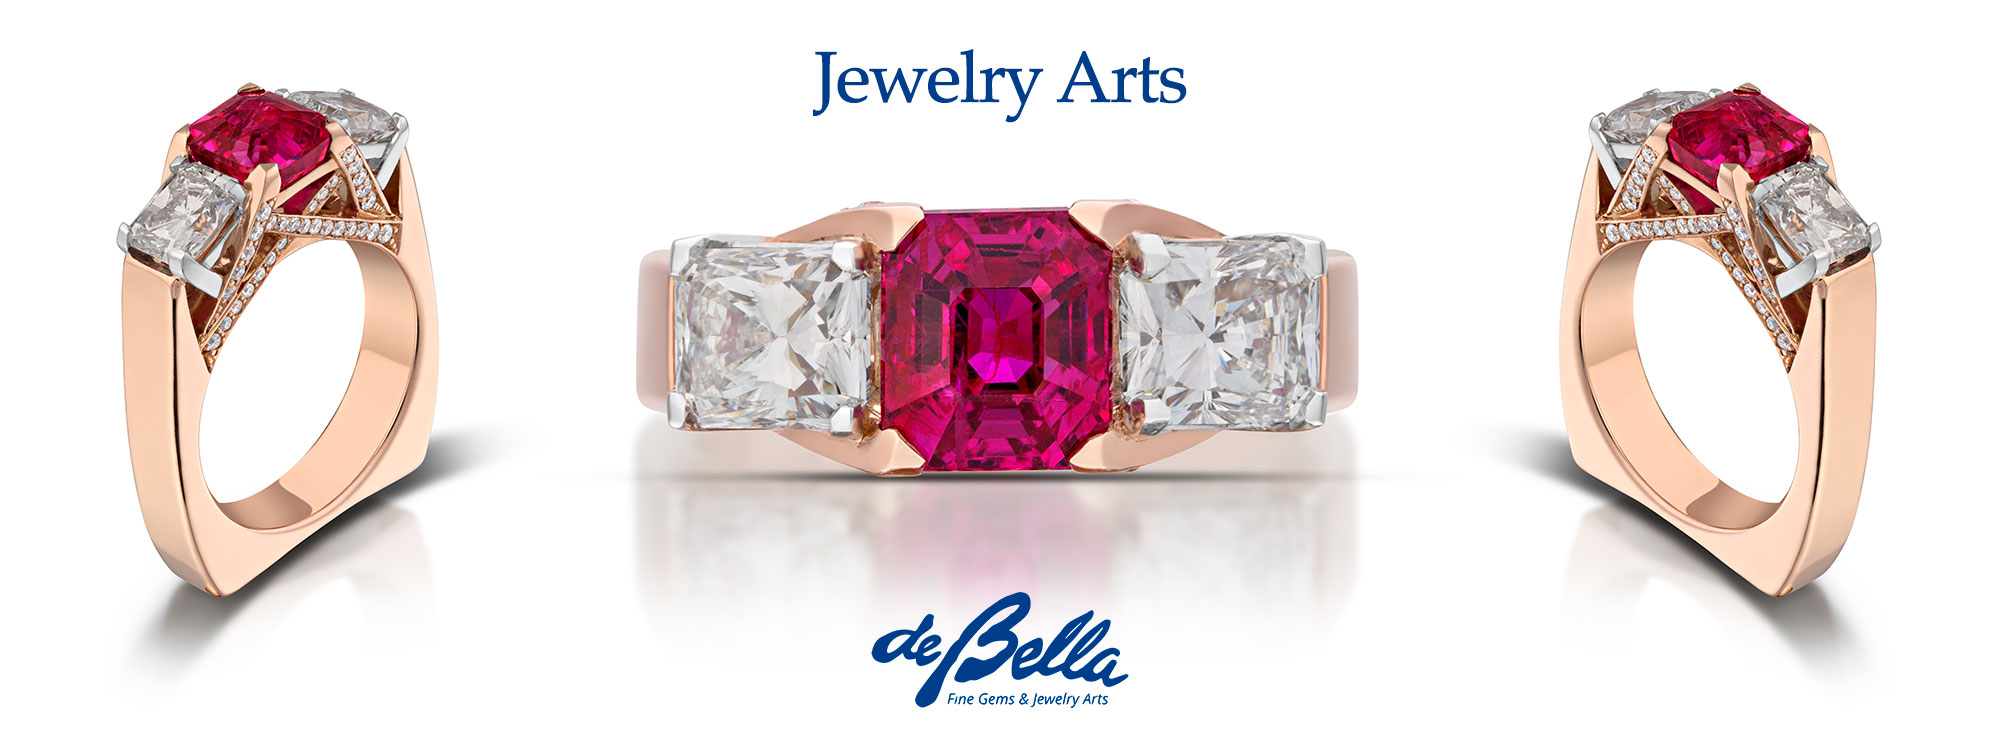 deBella Jewelry Arts